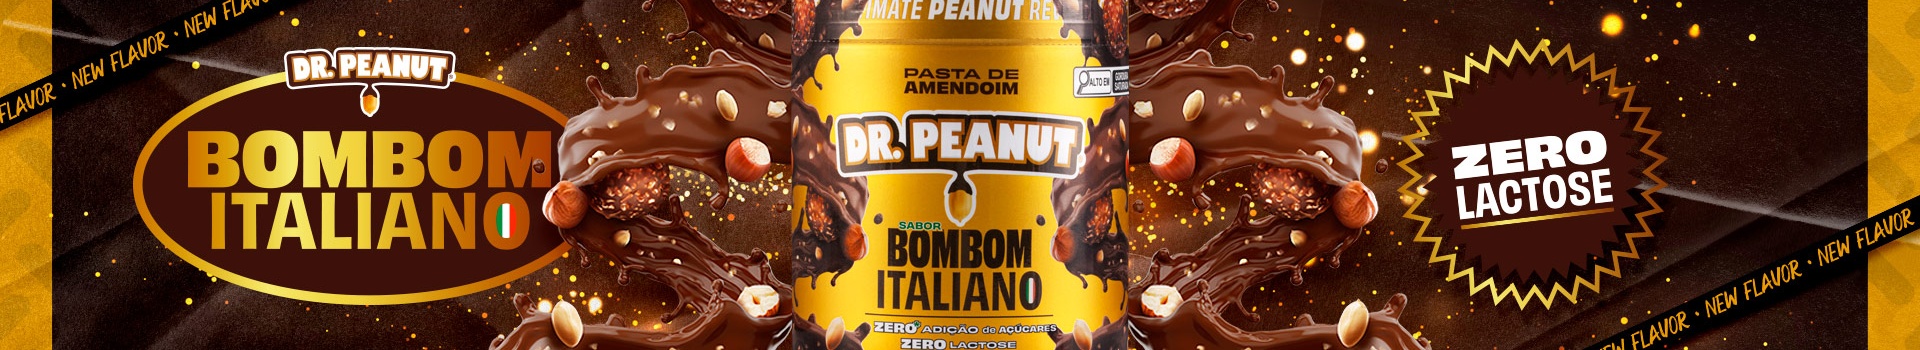 dr-peanut